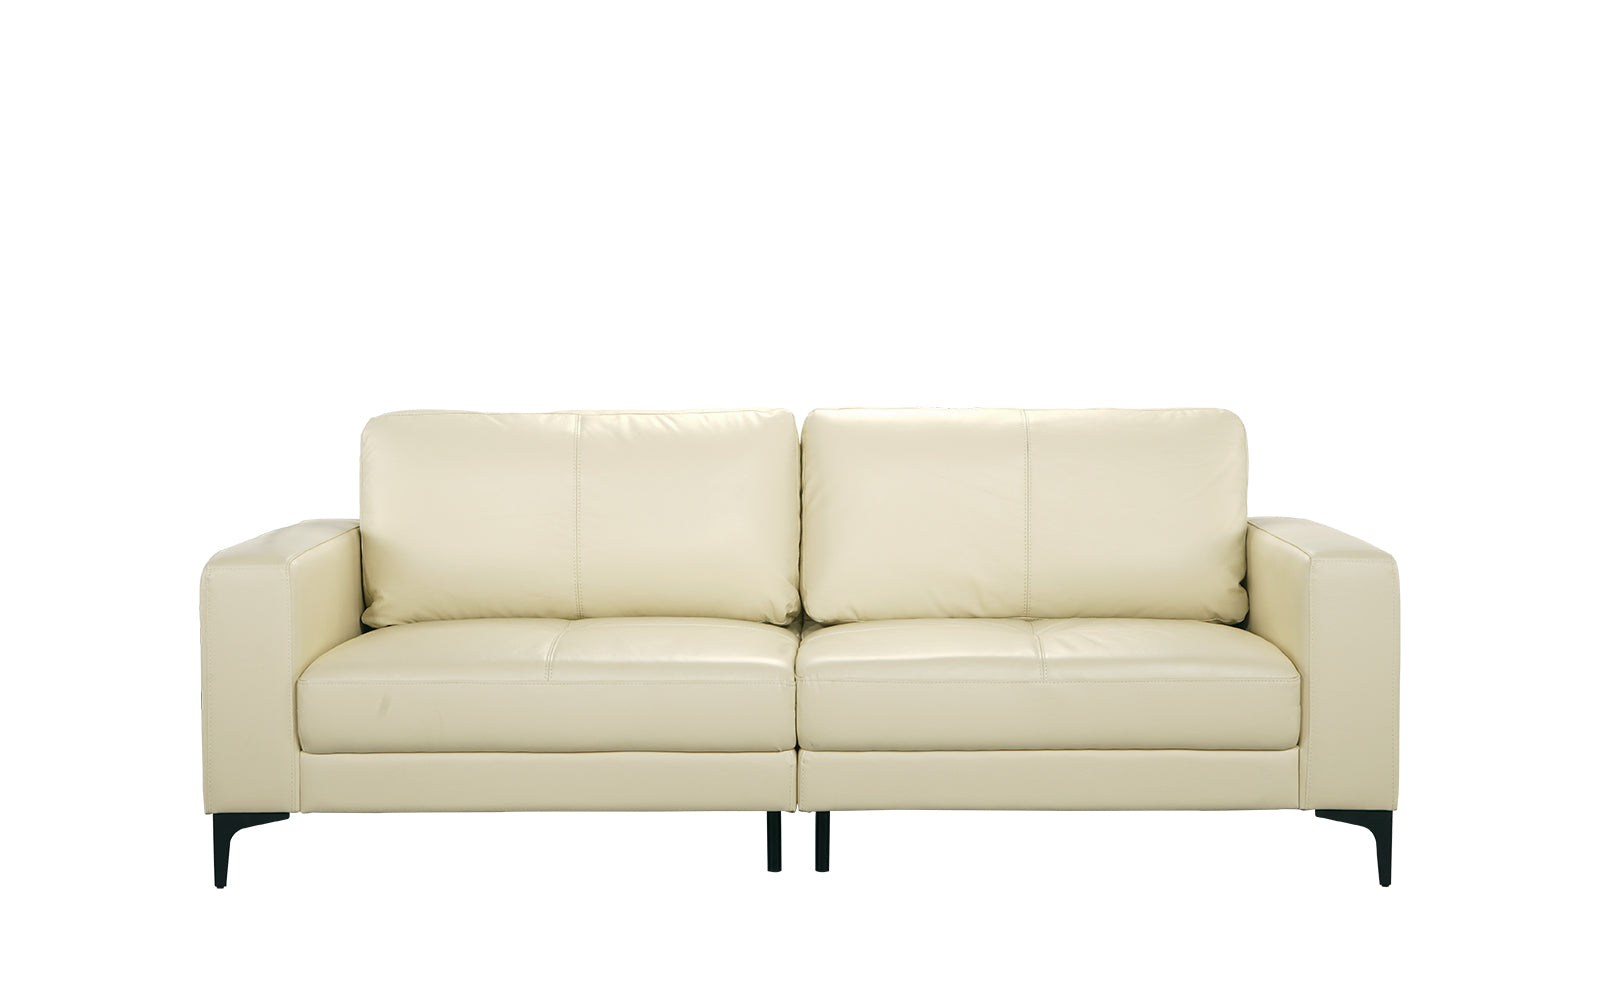 Sienna Mid Century Leather Match Sofa